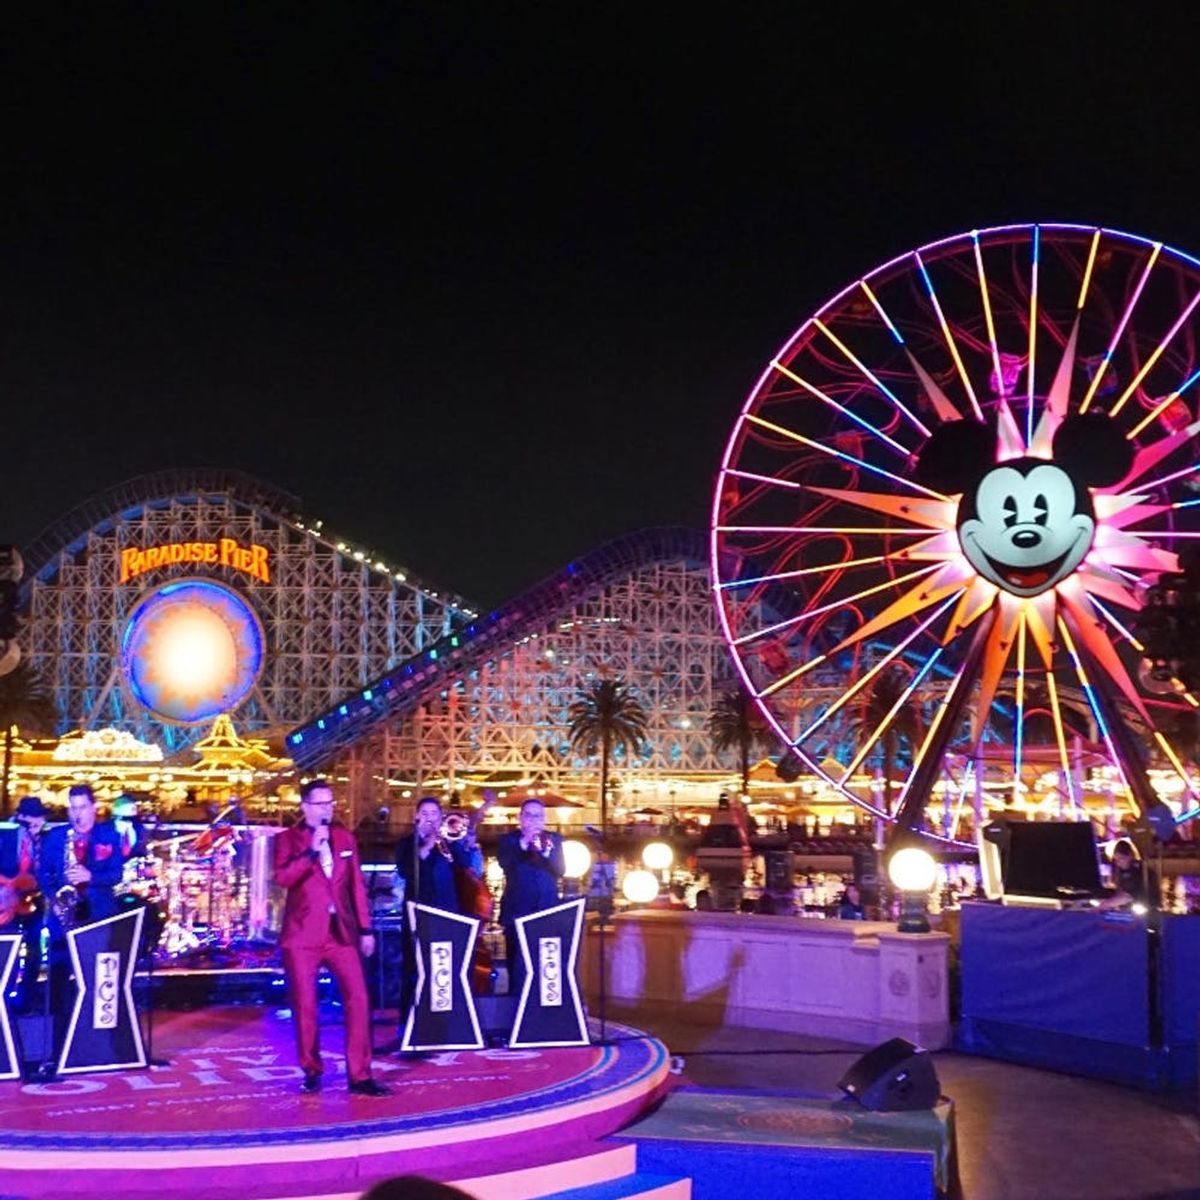 25 Wonderful Things to Experience at Disneyland This Holiday Season